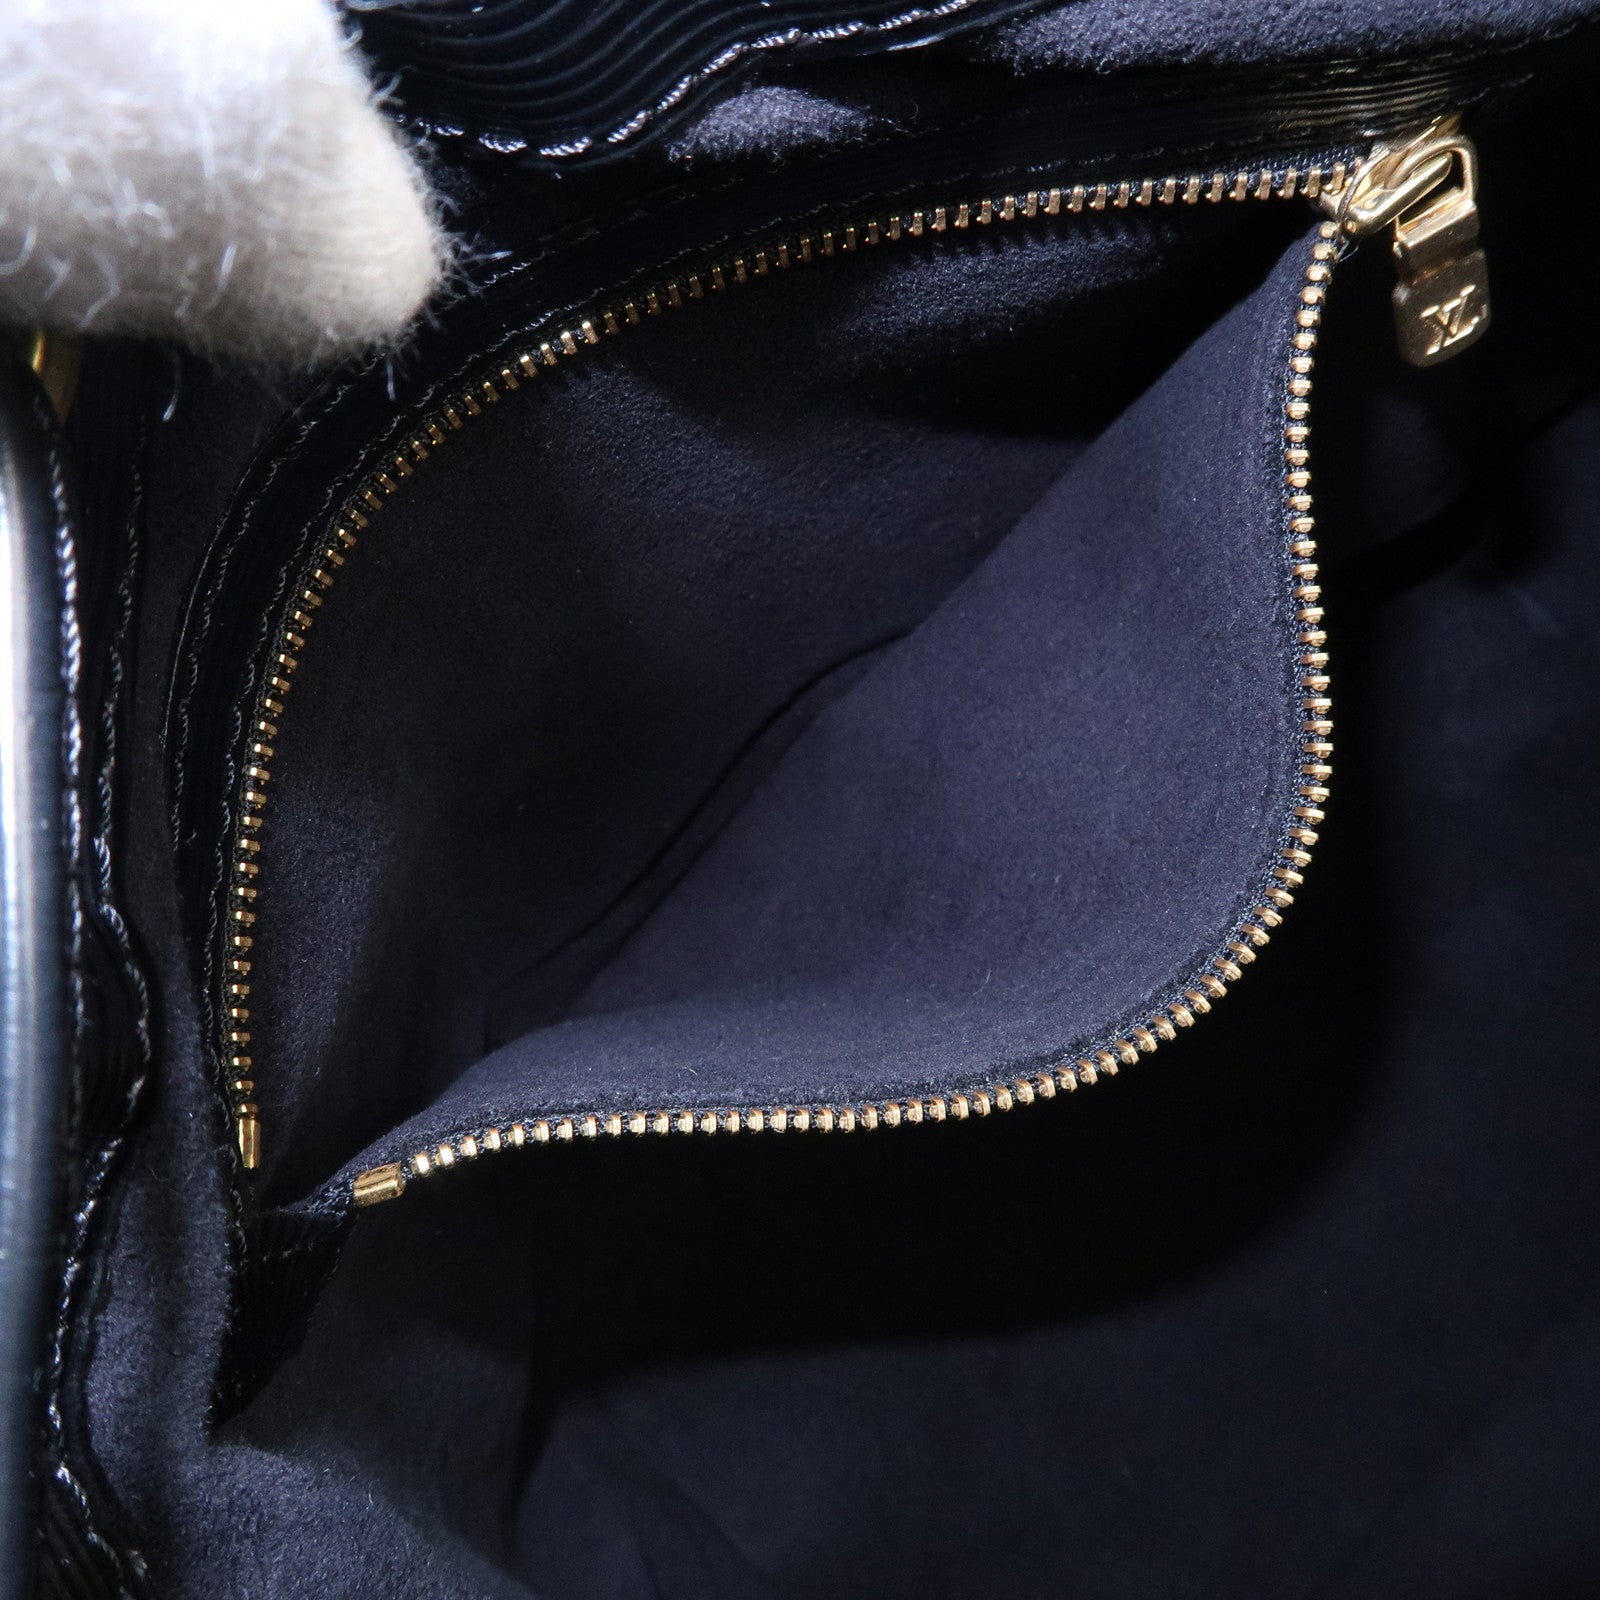 URGENT SALE!!! Authentic LV Petit Noe Epi Black, Luxury, Bags